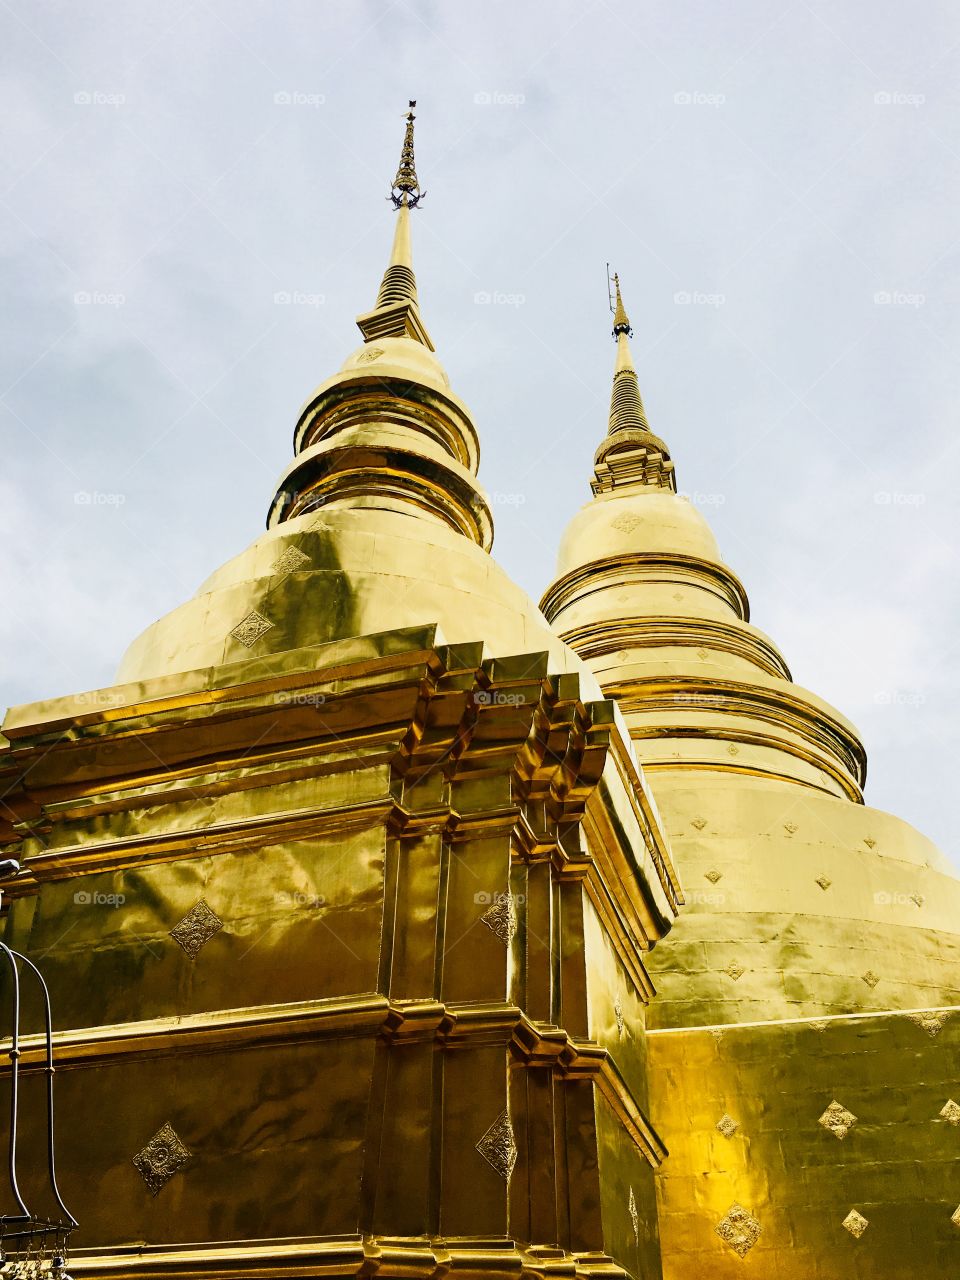 Wat pra sing golden pagoda temple in Chiangmai, Thailand 